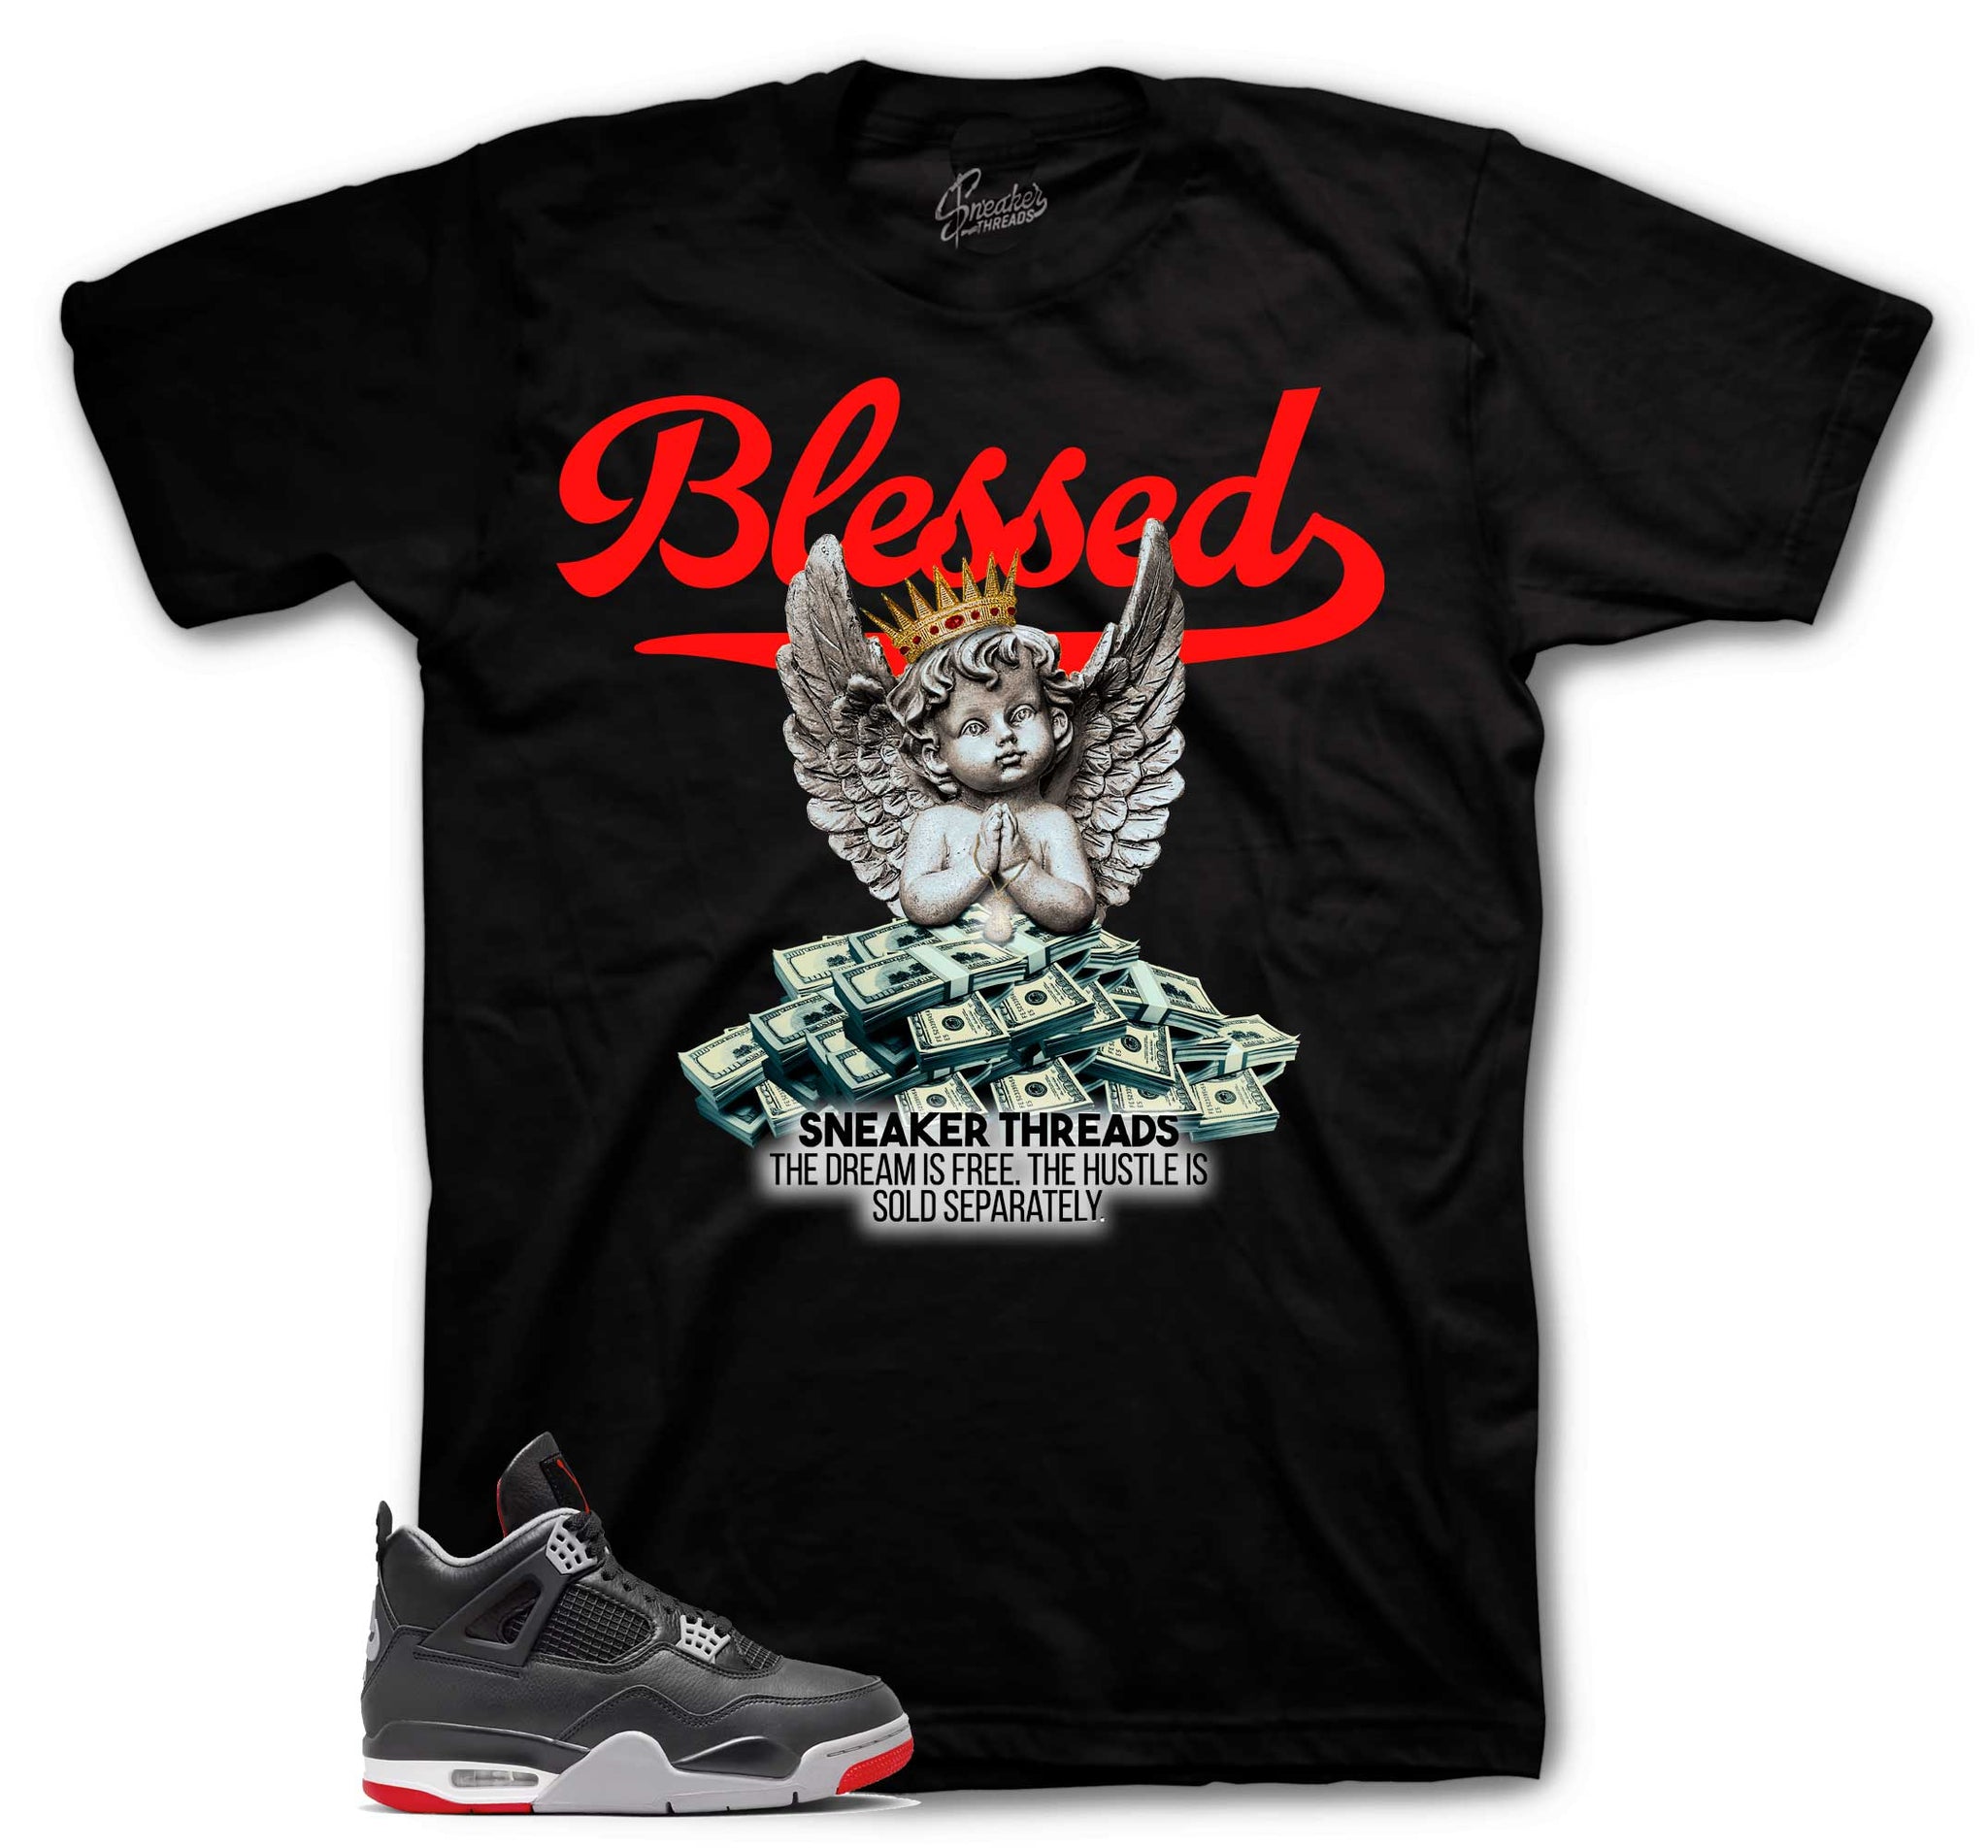 Retro 4 Bred Shirt - Blessed Angel - Black